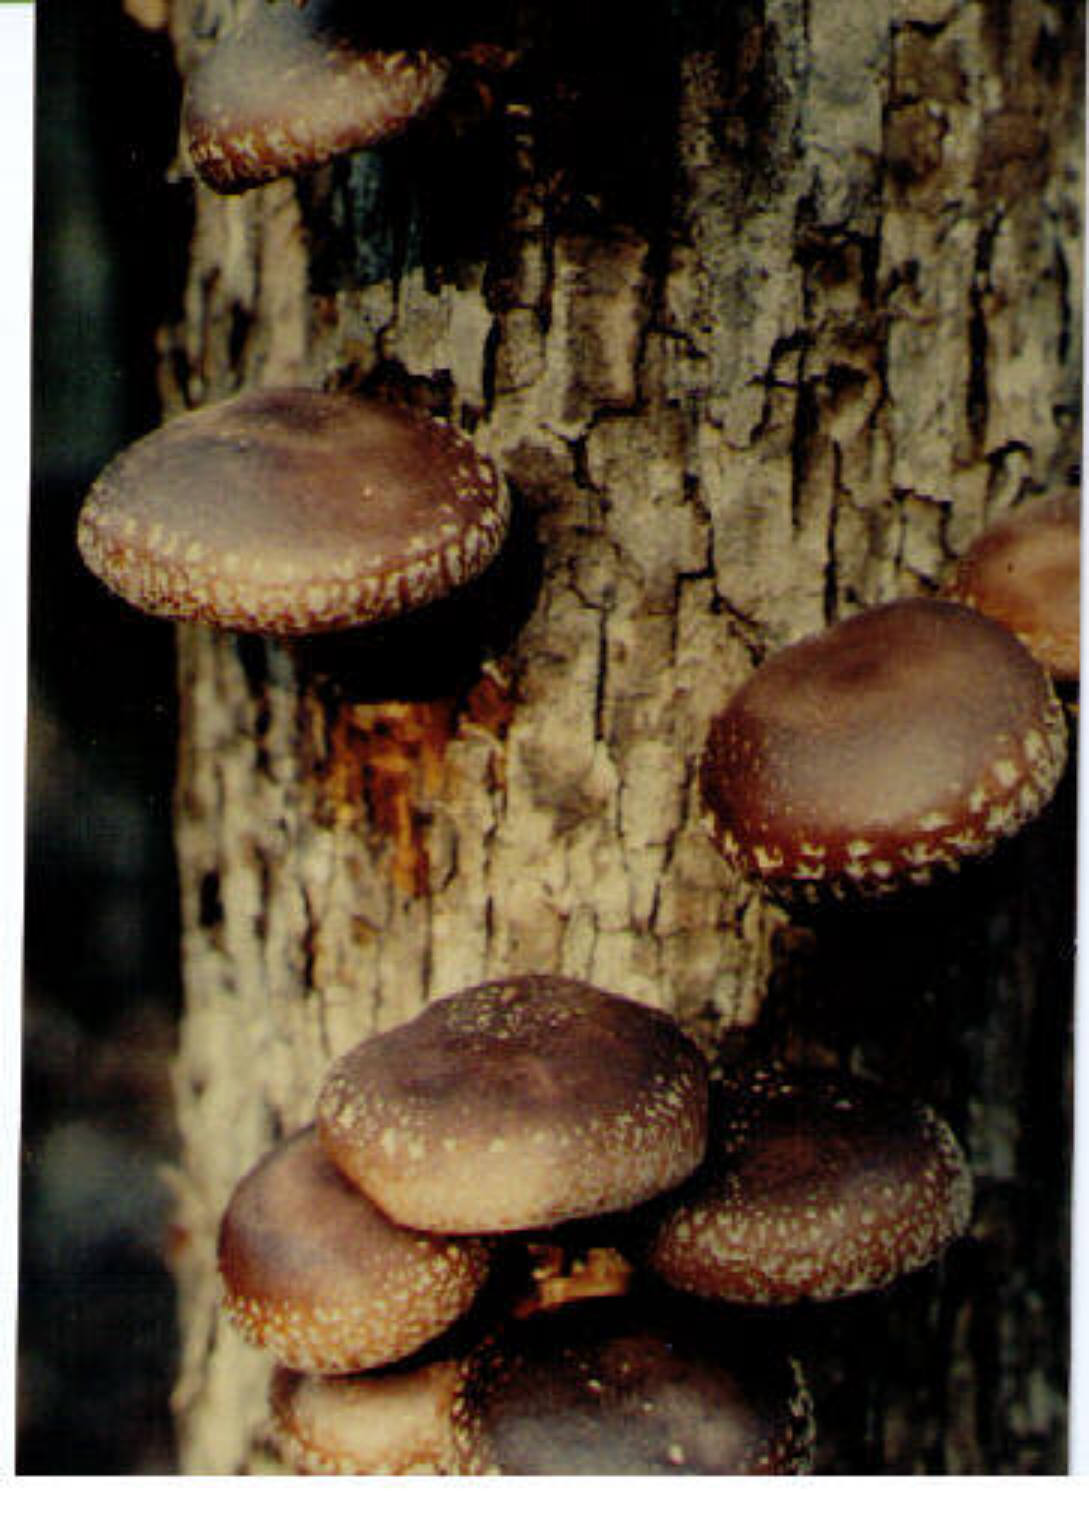 Shiitakes growing on an inoculated log